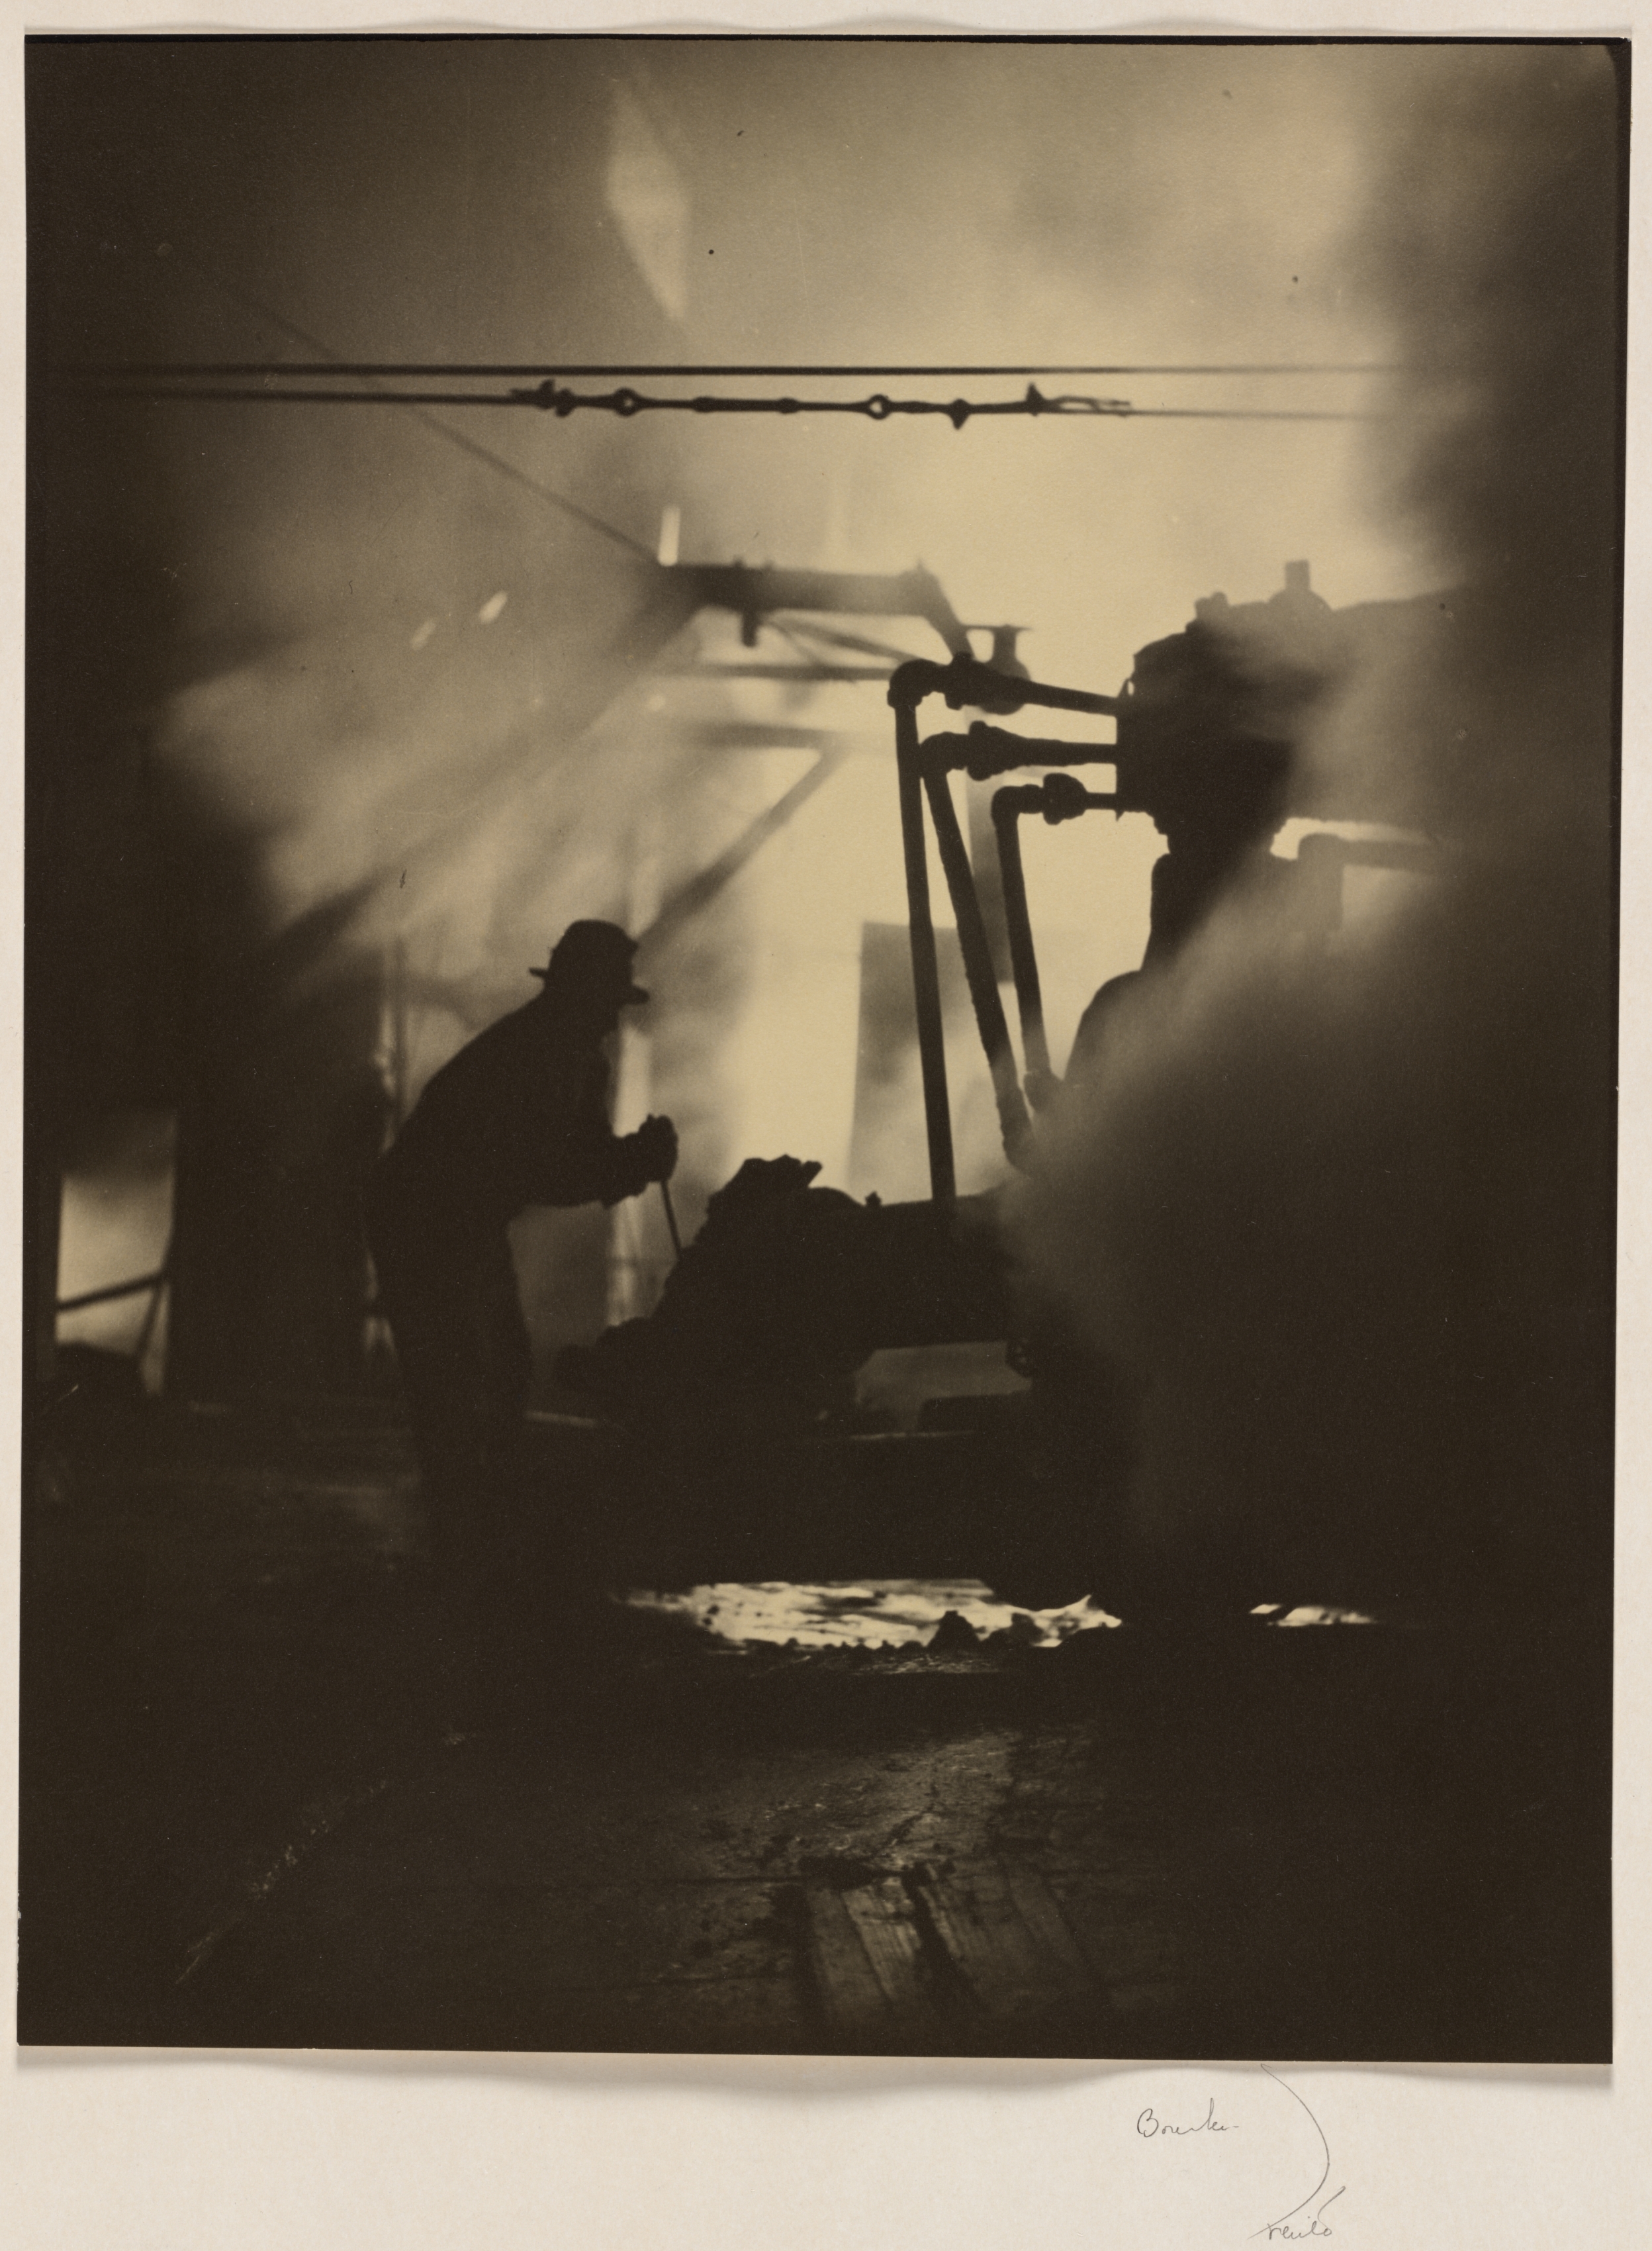 Blast Furnace Operator with "Mud Gun", Otis Steel Co., Cleveland